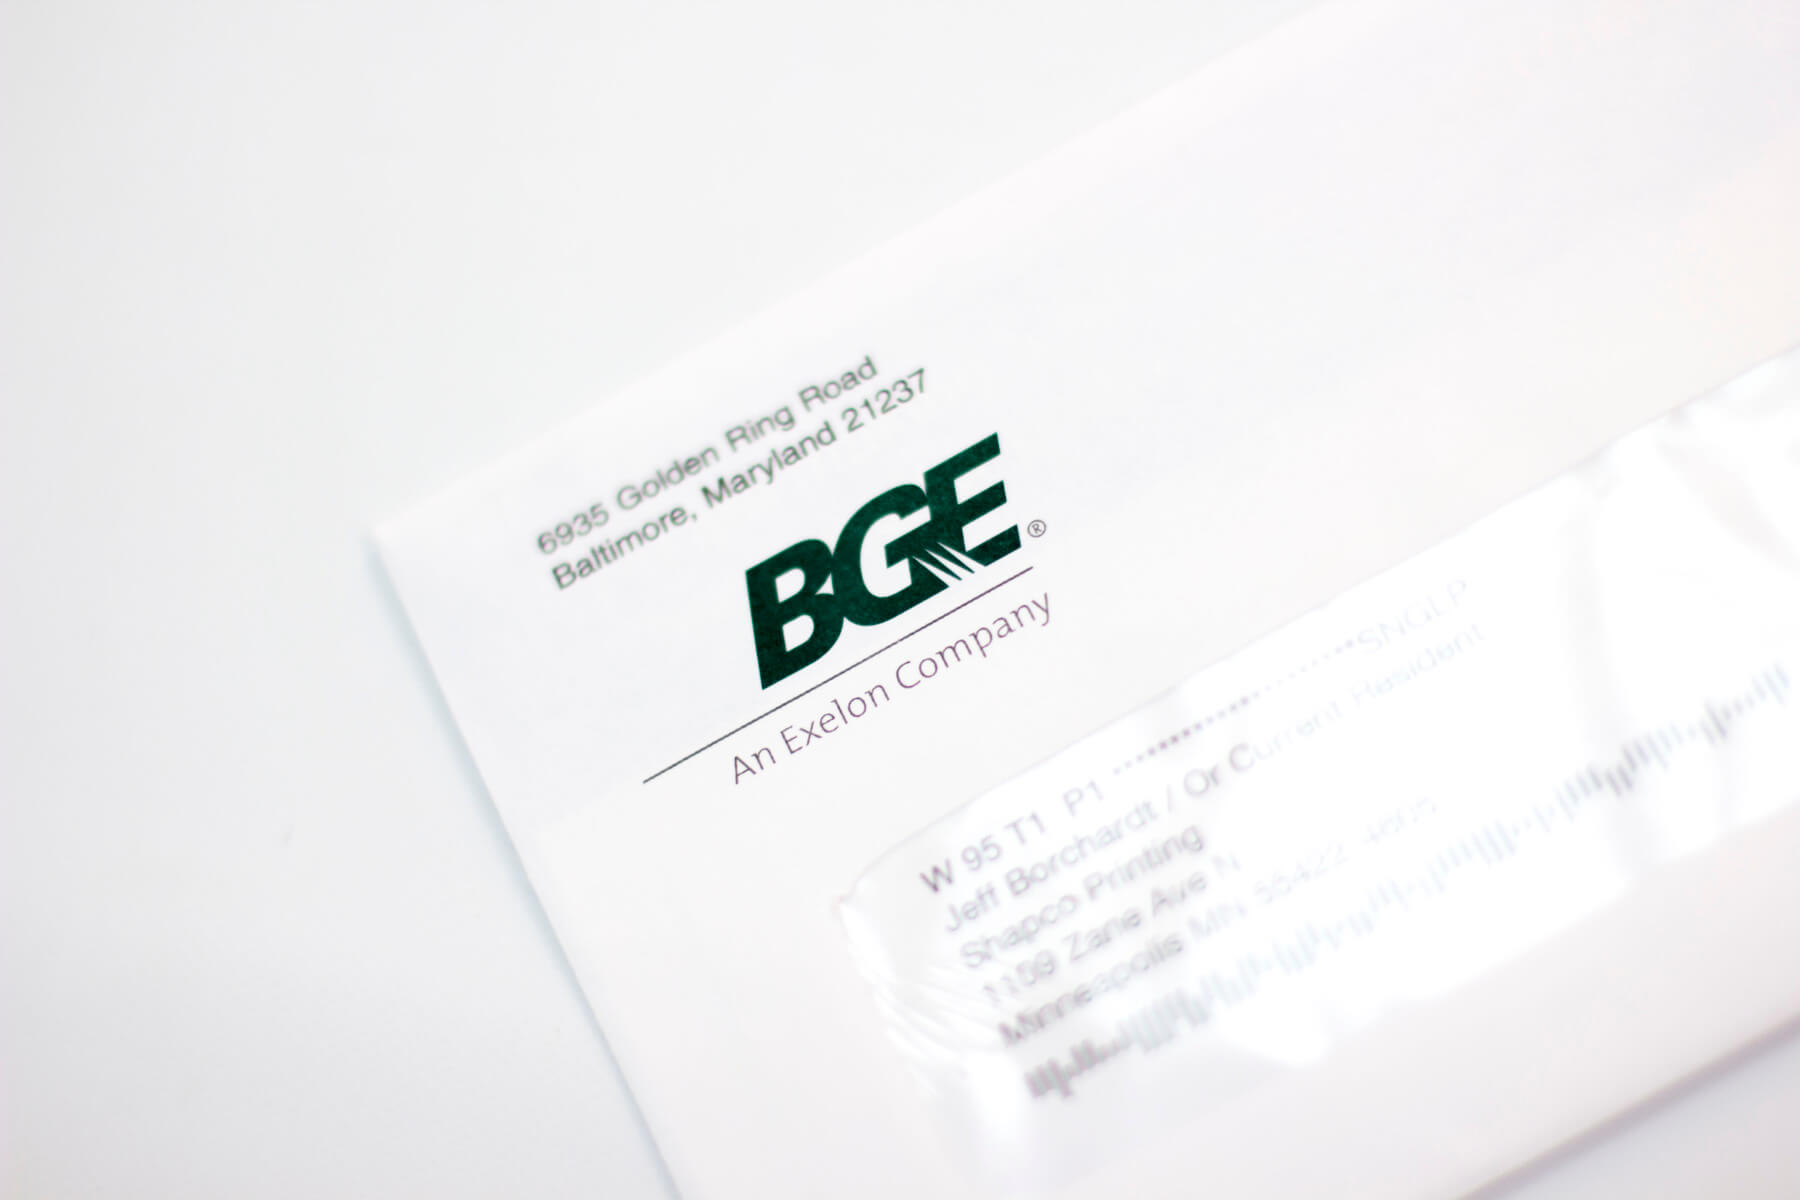 BGE Peak Reward Mailer in envelope Shapco Printing Inc.